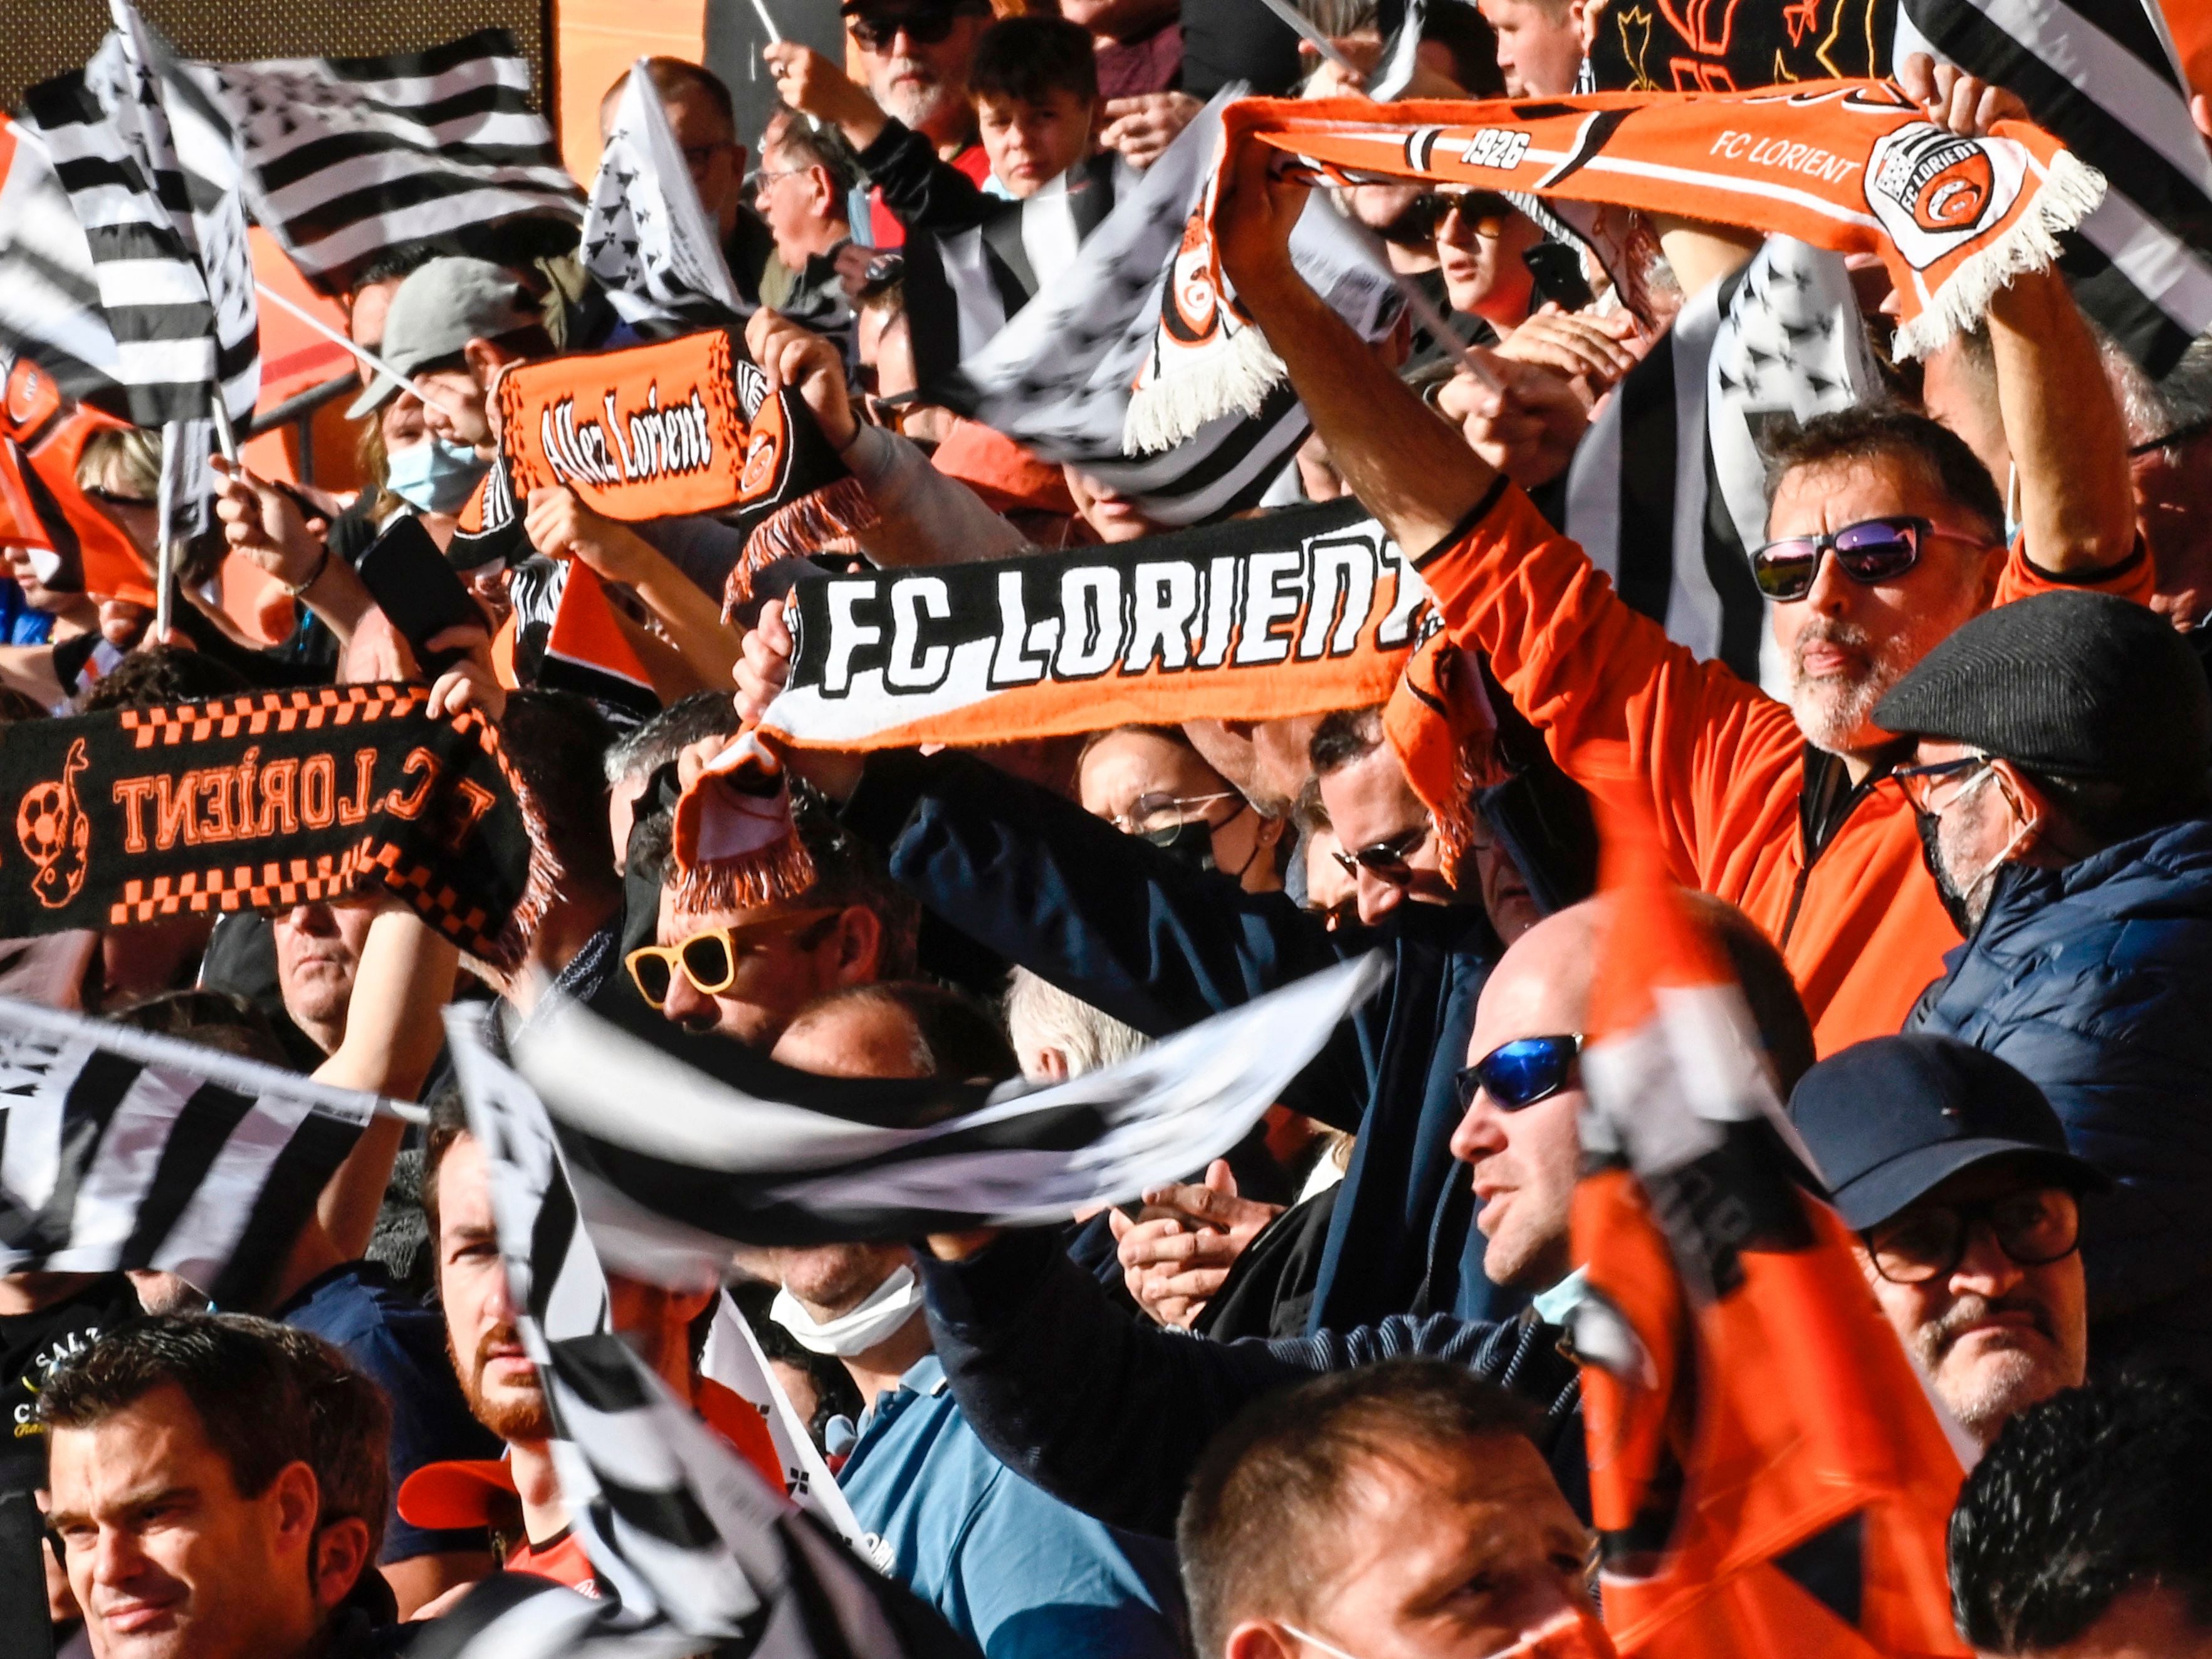 Lorient vs PSG